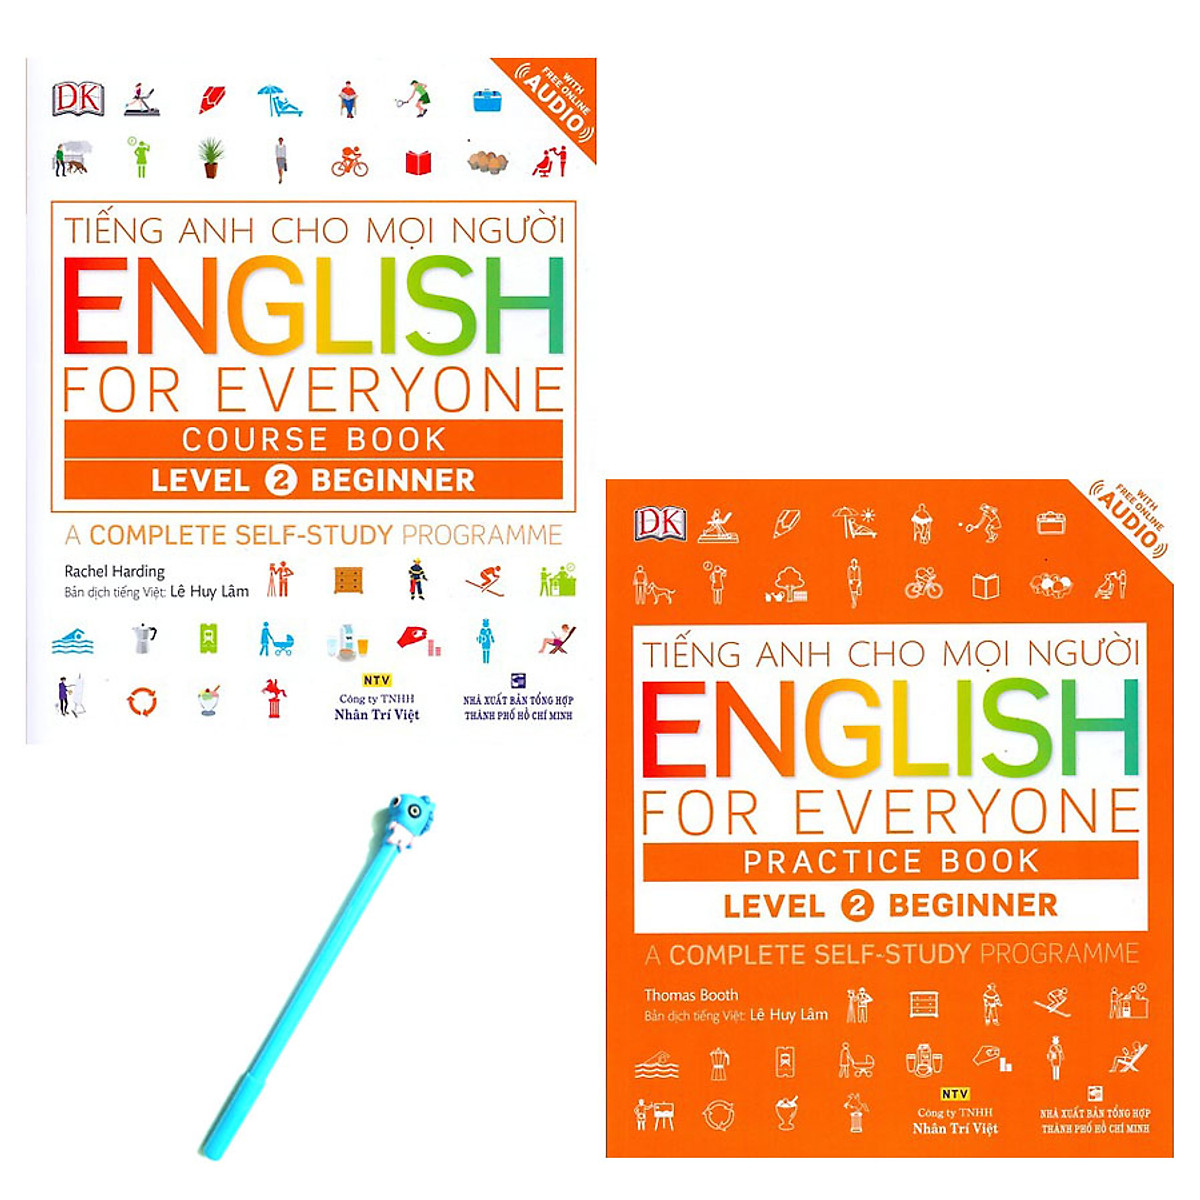 Combo Tiếng Anh Cho Mọi Người Level 2 Beginner: English For Everyone Practice Book và English For Everyone Course Book ( Tặng Kèm Bút )